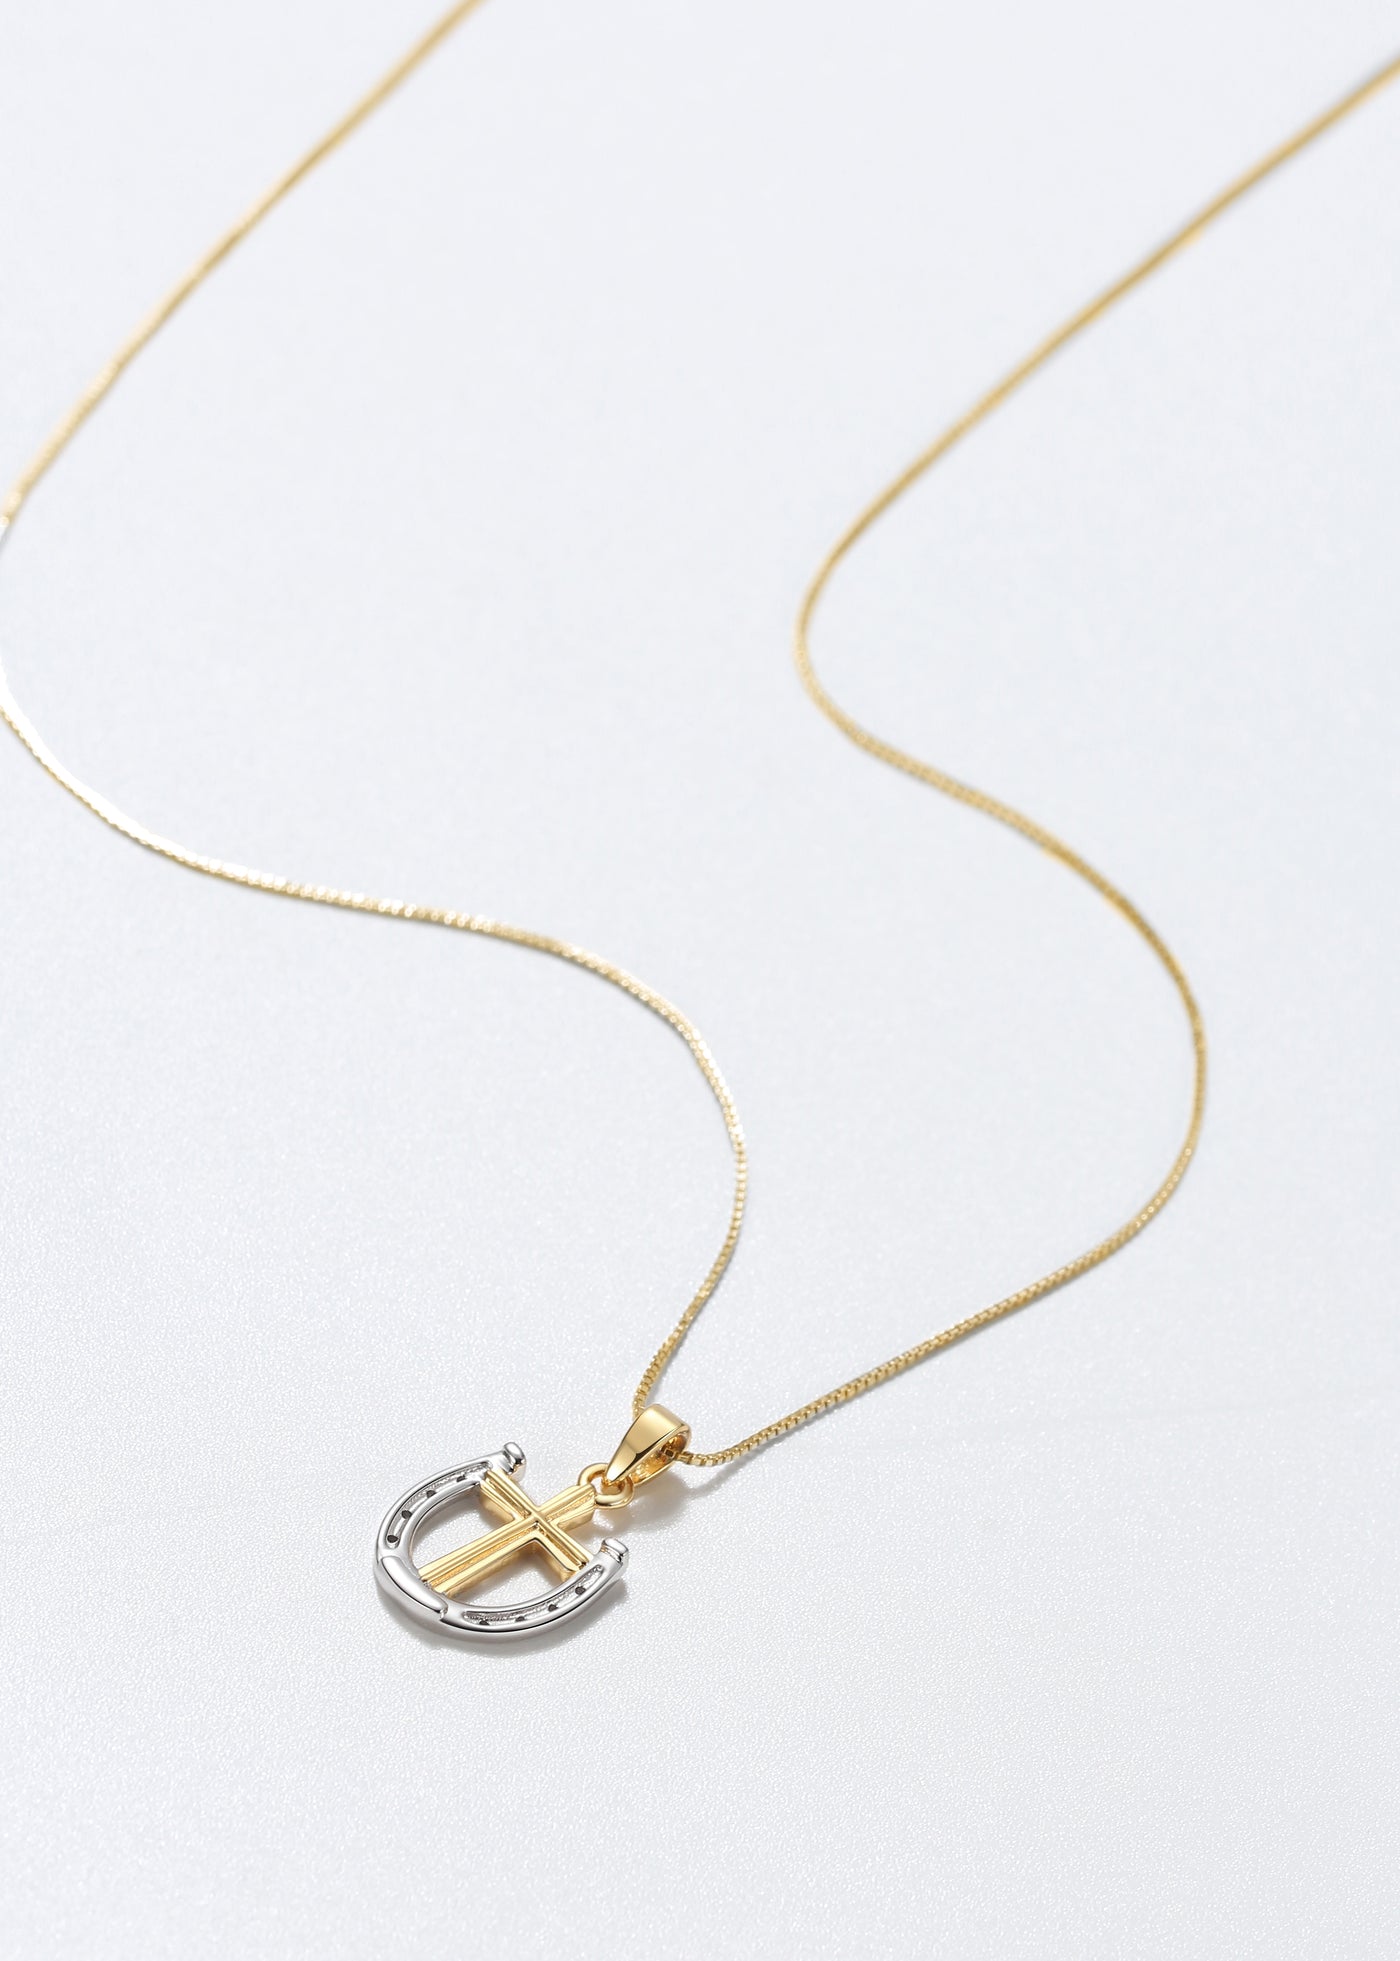 Dark Horse Rider's Prayer Mini G/S Necklace Gold Chain